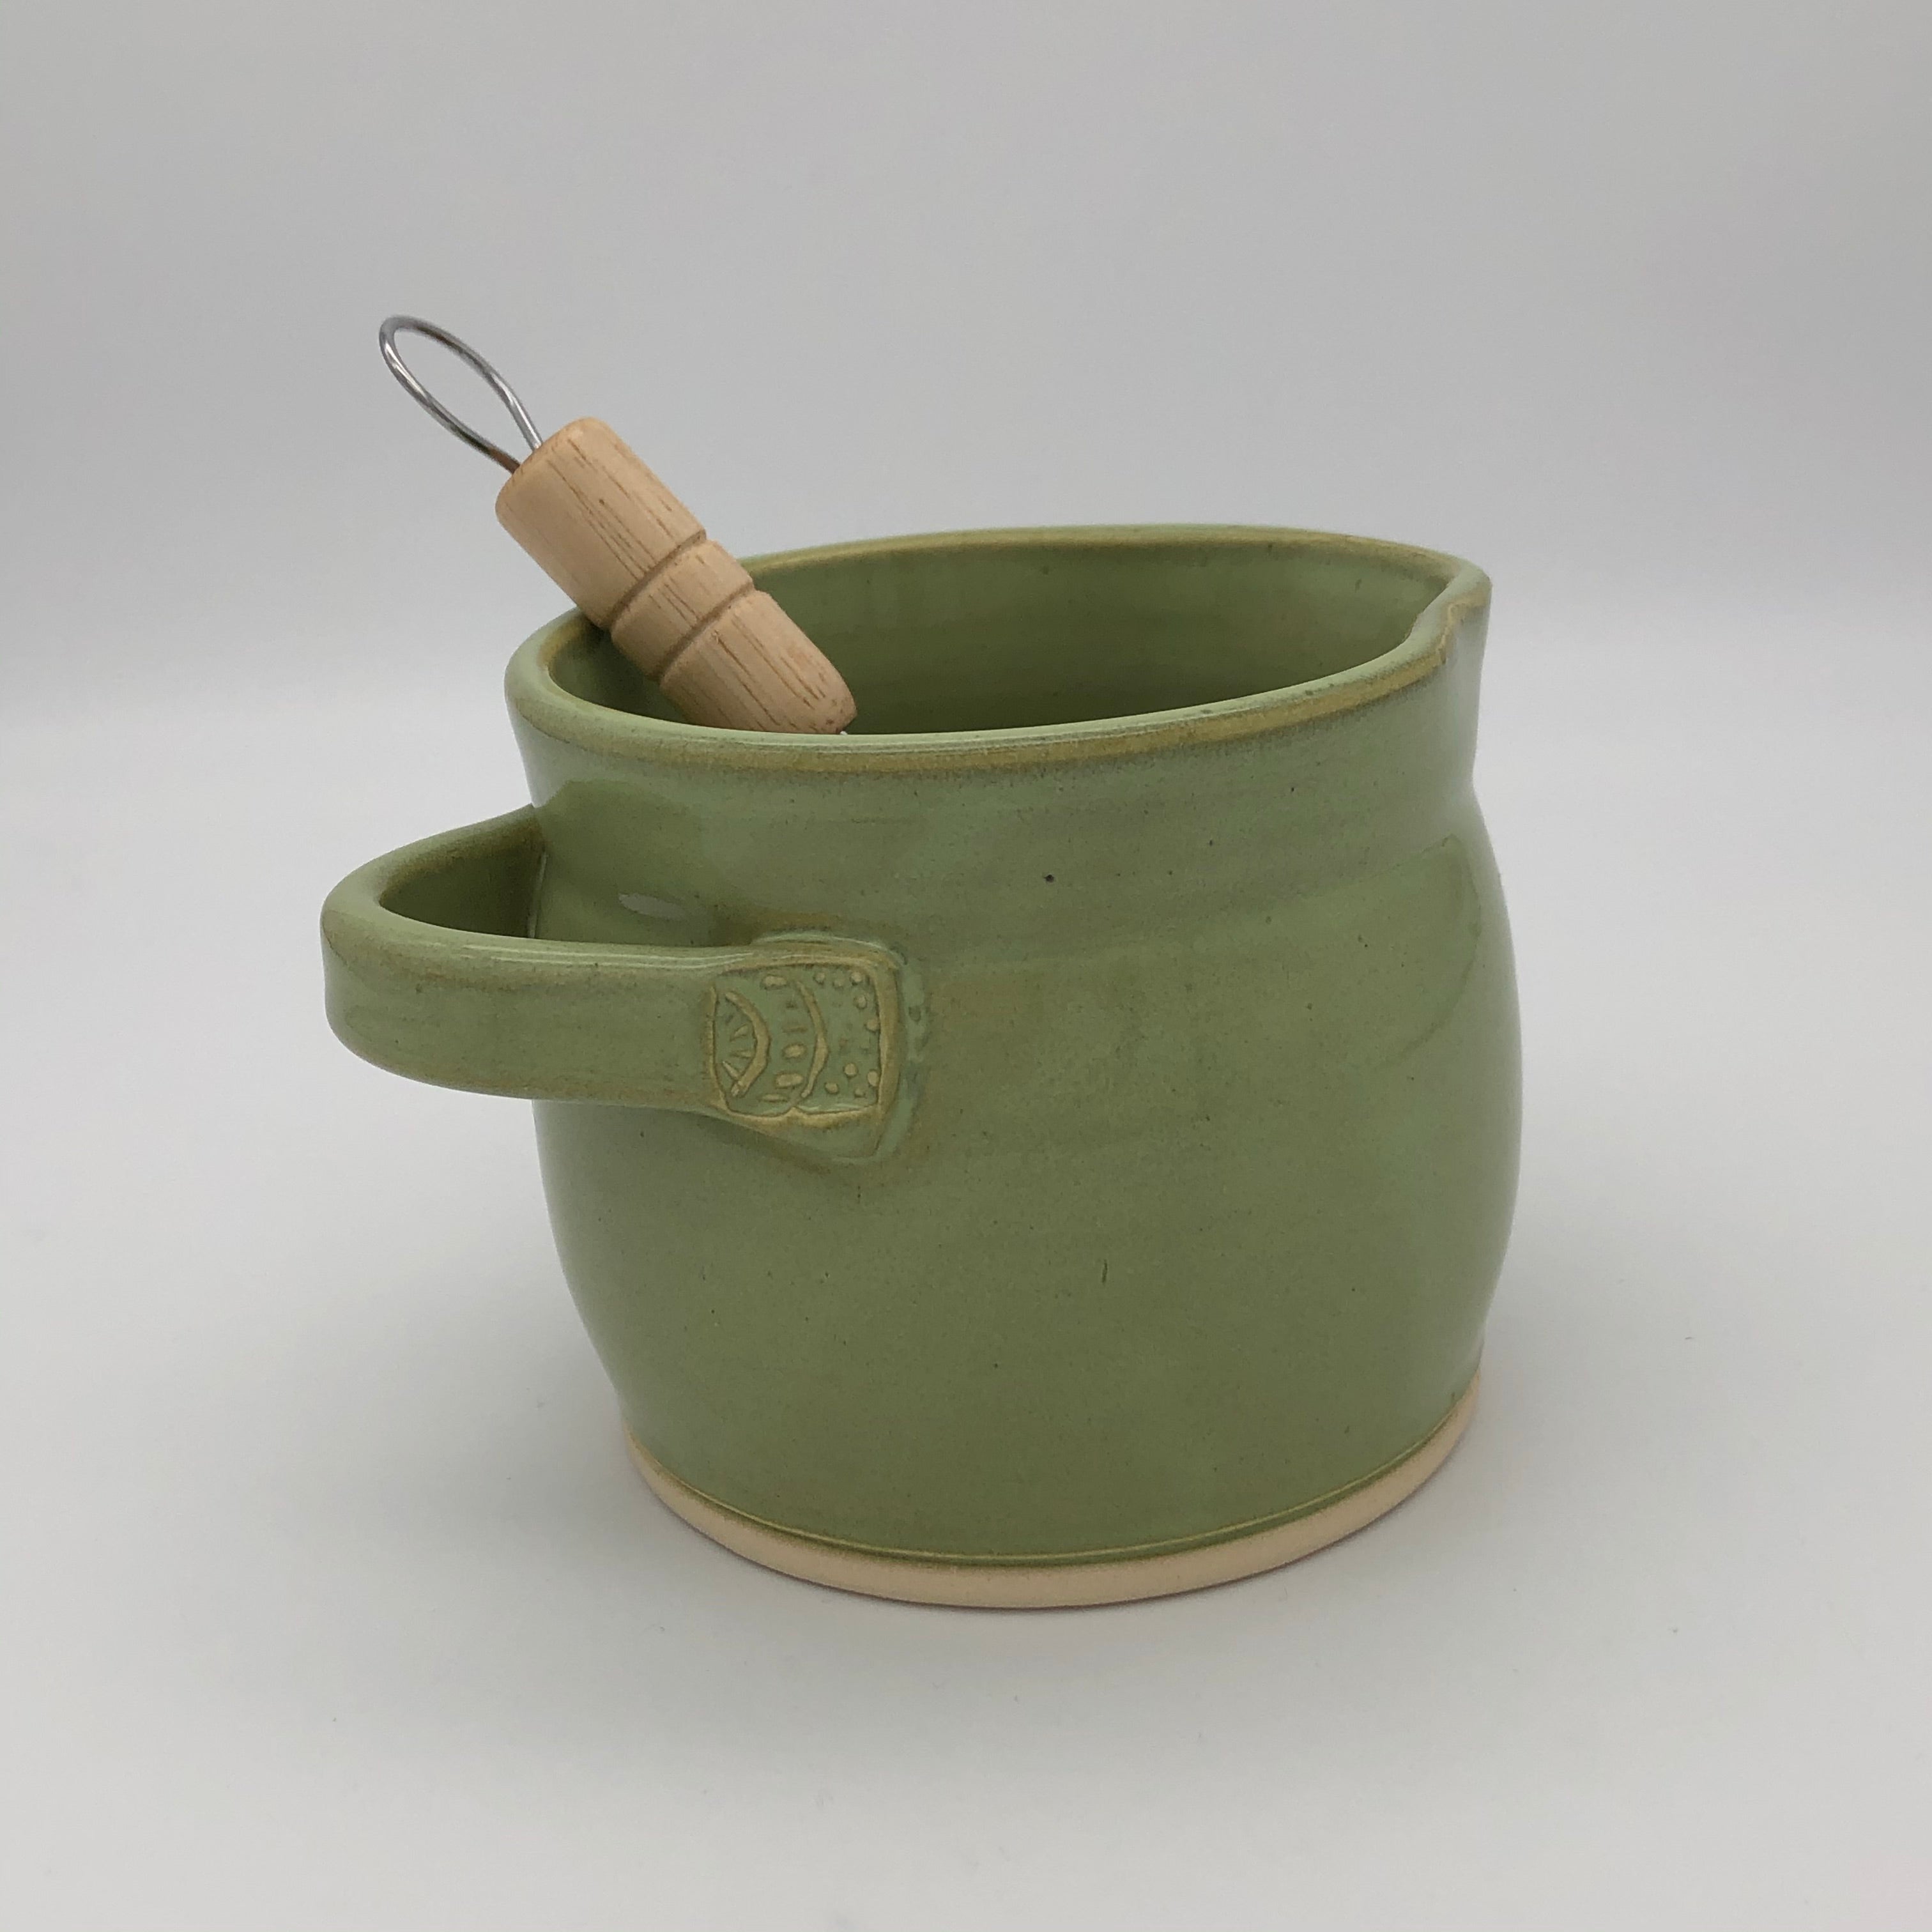 Whisking Bowls in White Stoneware